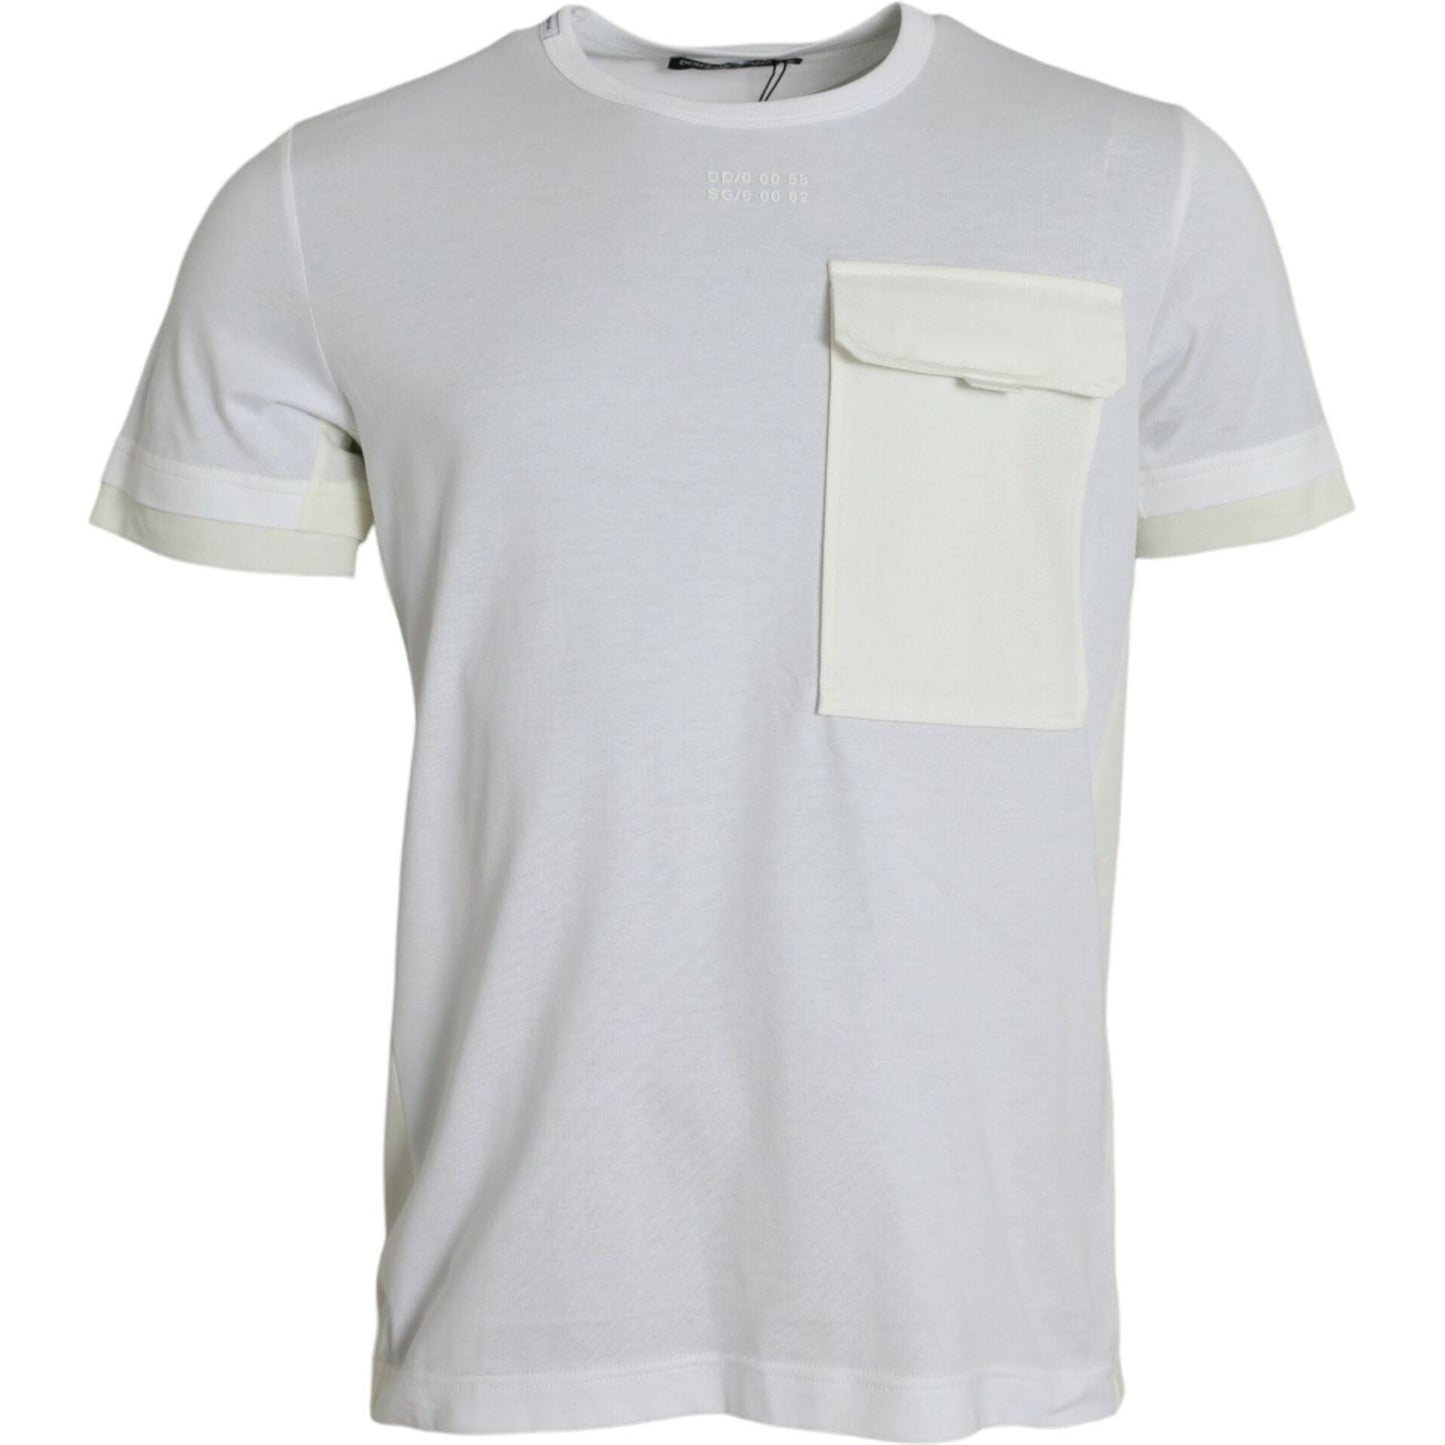 Dolce & Gabbana White Cotton Pocket Short Sleeves T-shirt white-cotton-pocket-short-sleeves-t-shirt